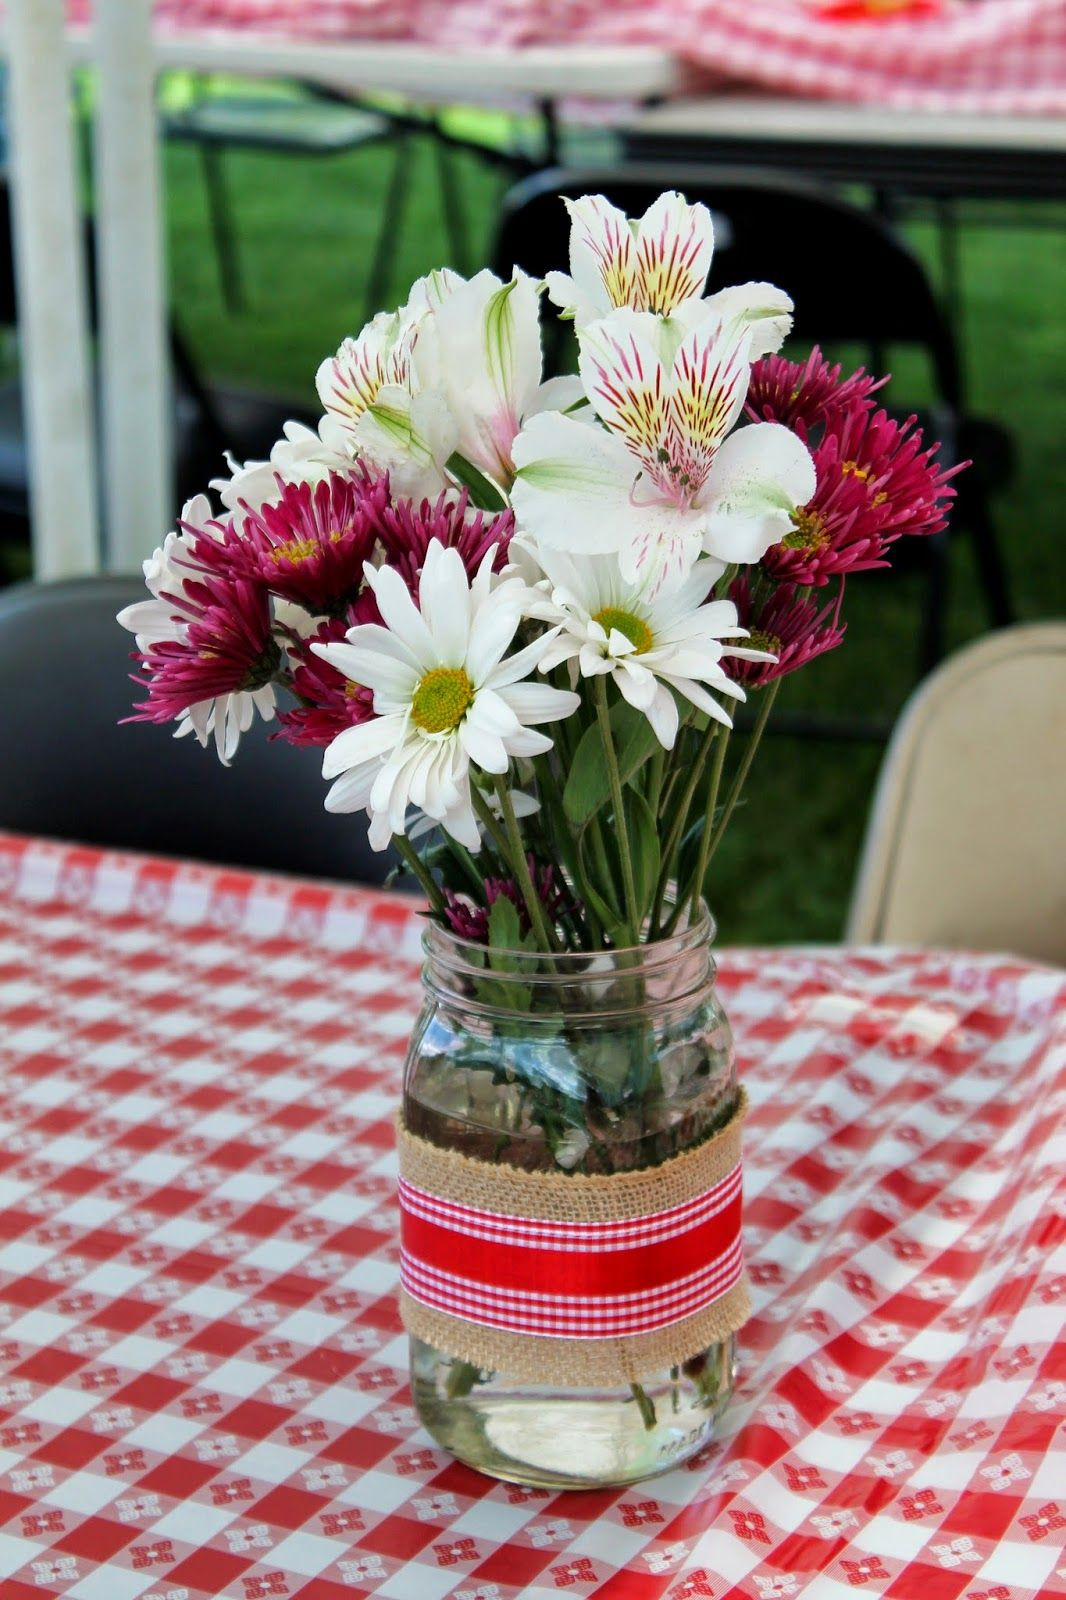 Flower Arrangement Ideas For Engagement Party
 I DO BBQ Flower Centerpiece in Mason Jars Couples